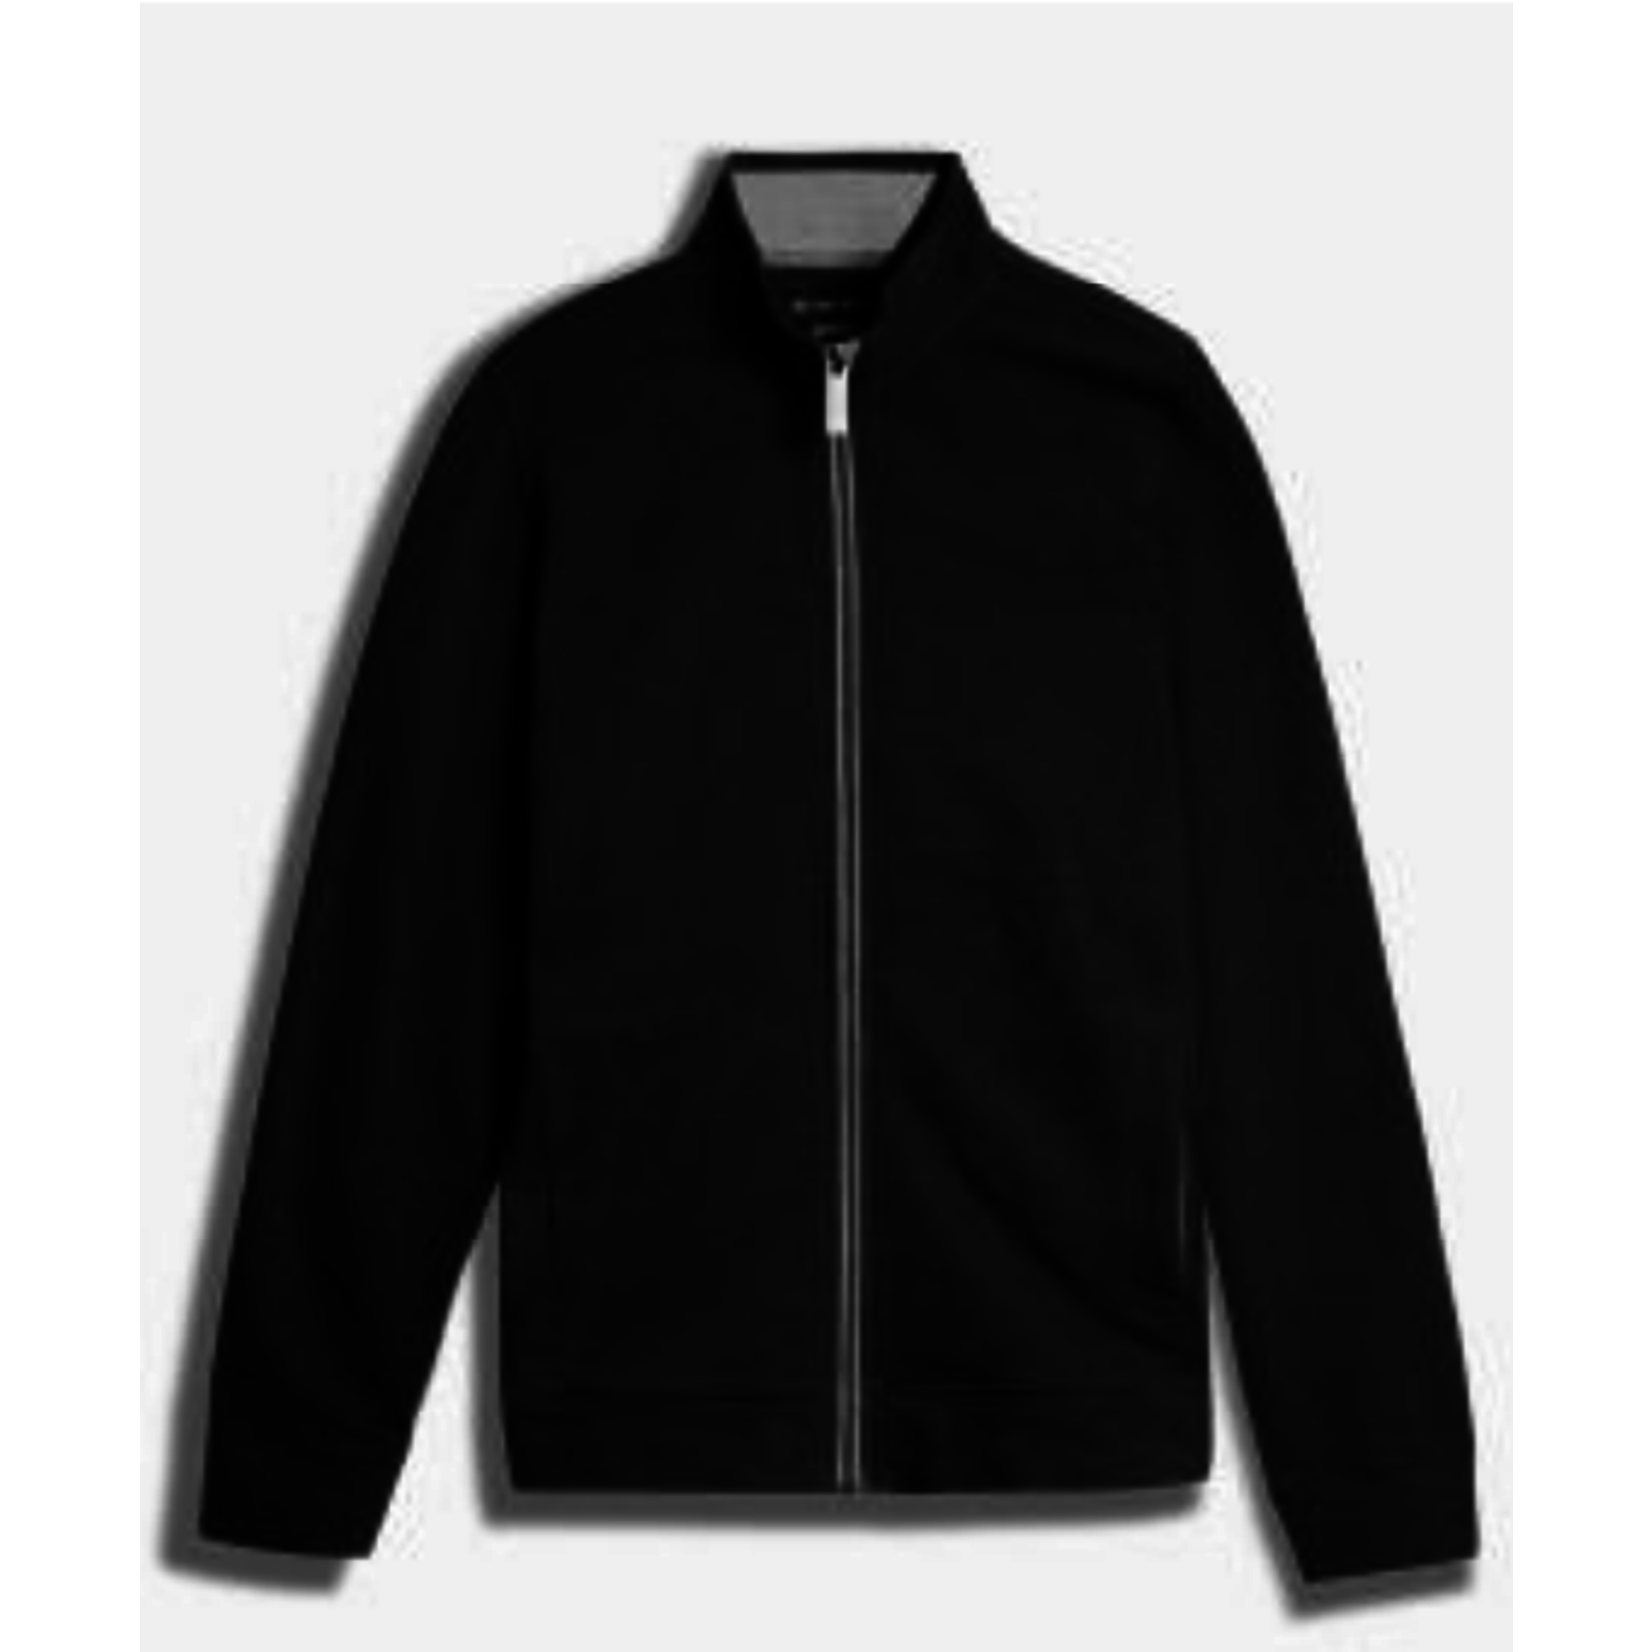 Black Bull Full zip sweater/jacket